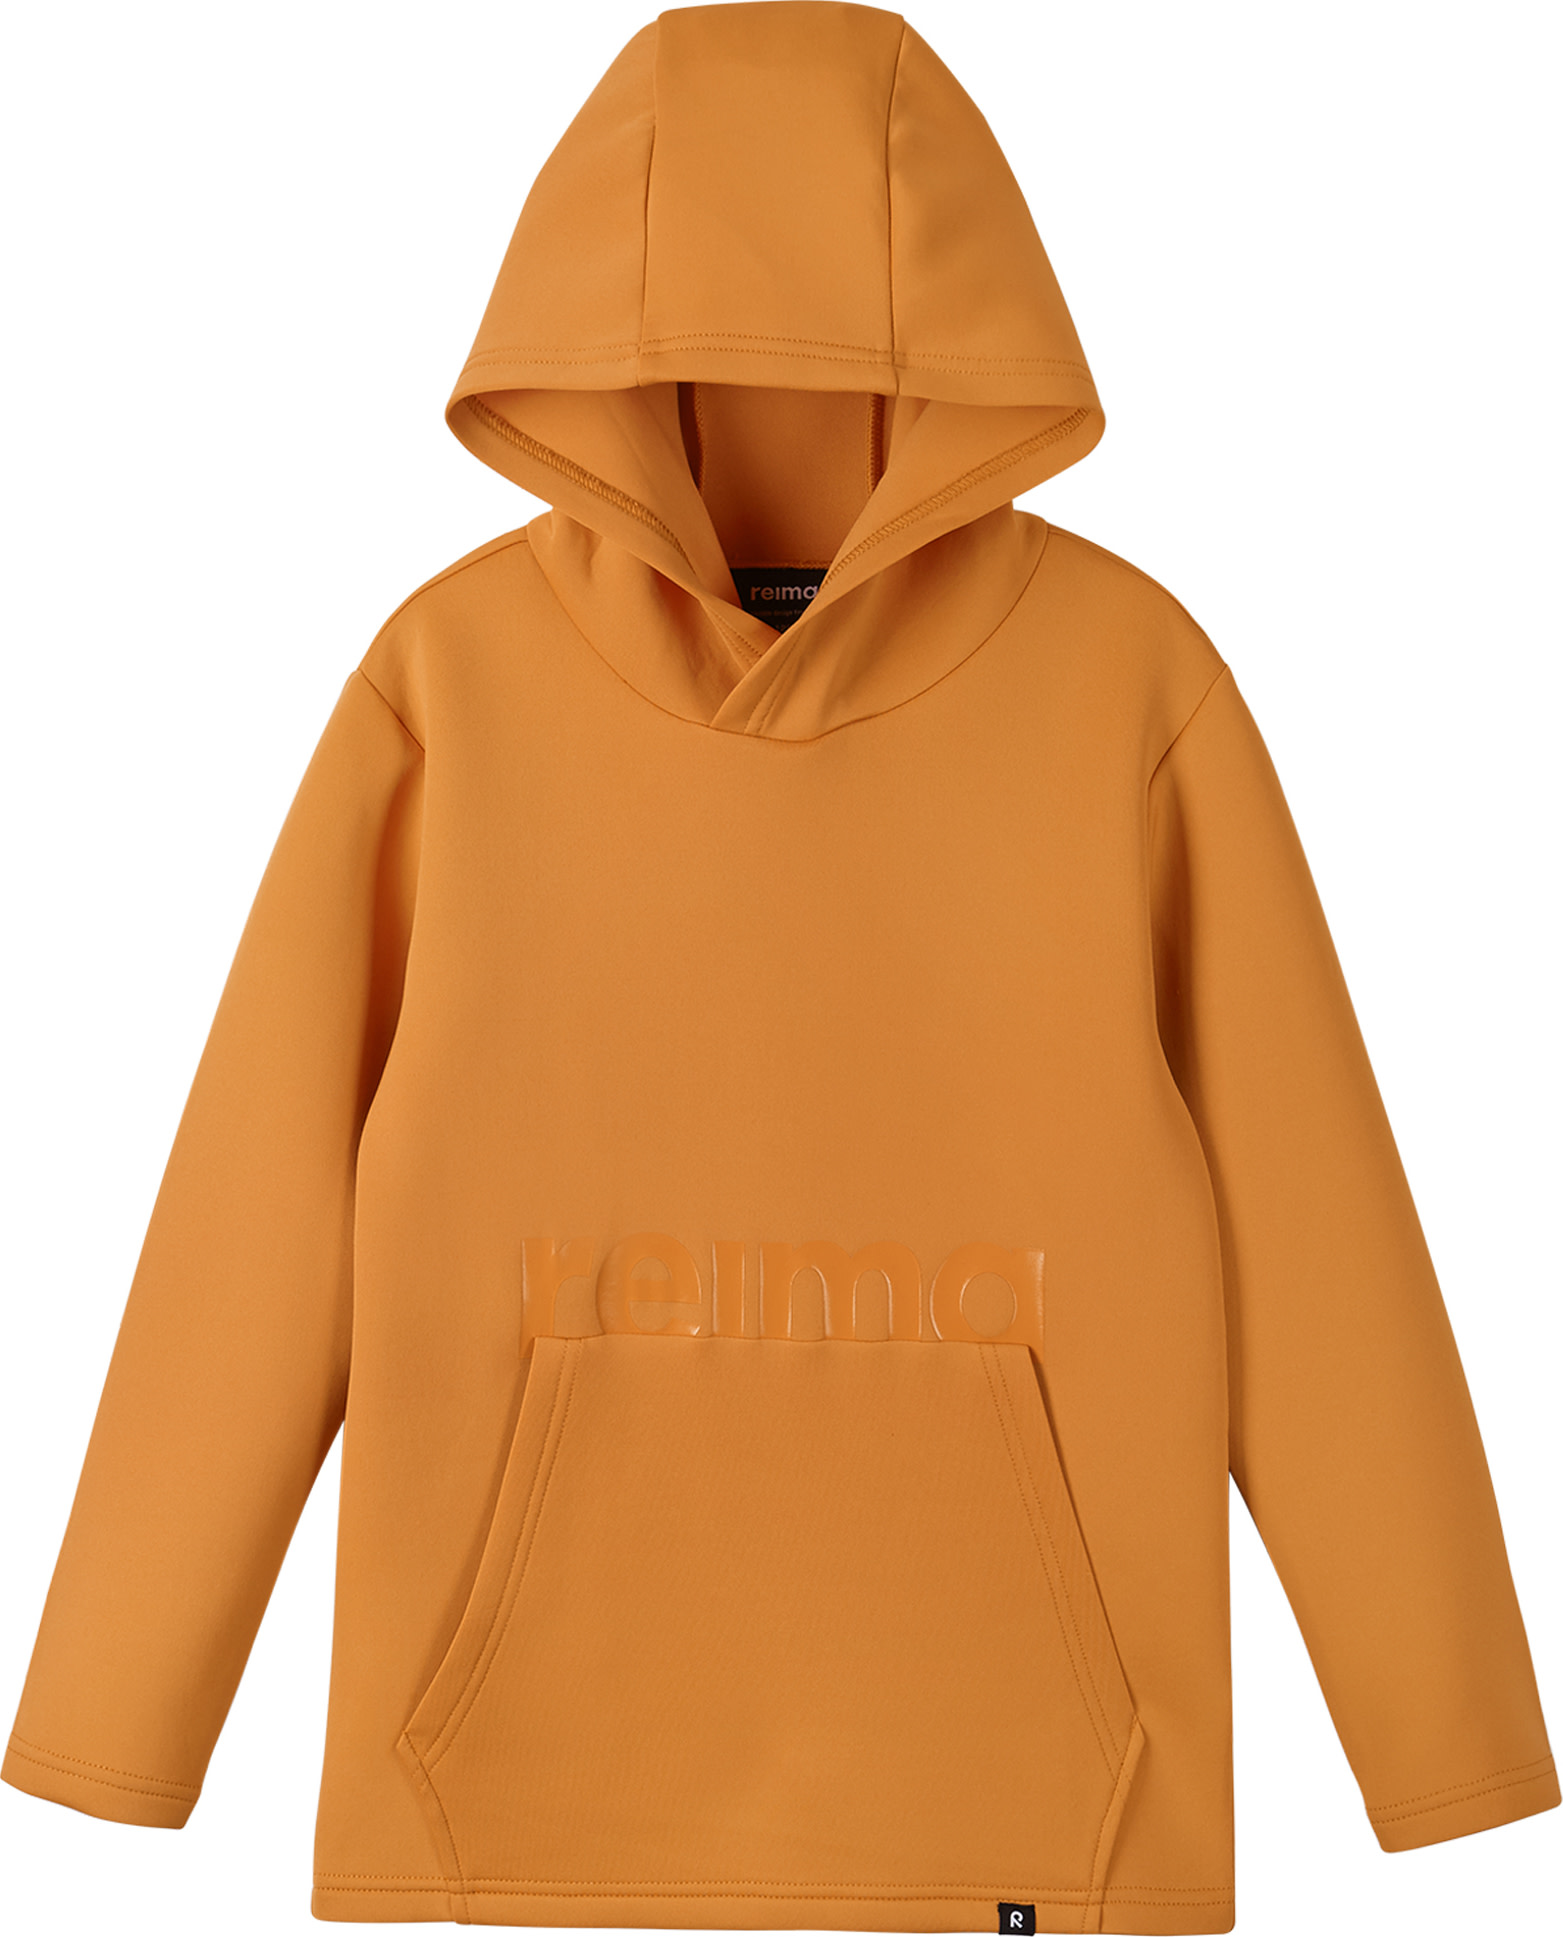 Reima Kids' Sweater Toimekas Dark Orange 2840 116 cm, Dark Orange 2840